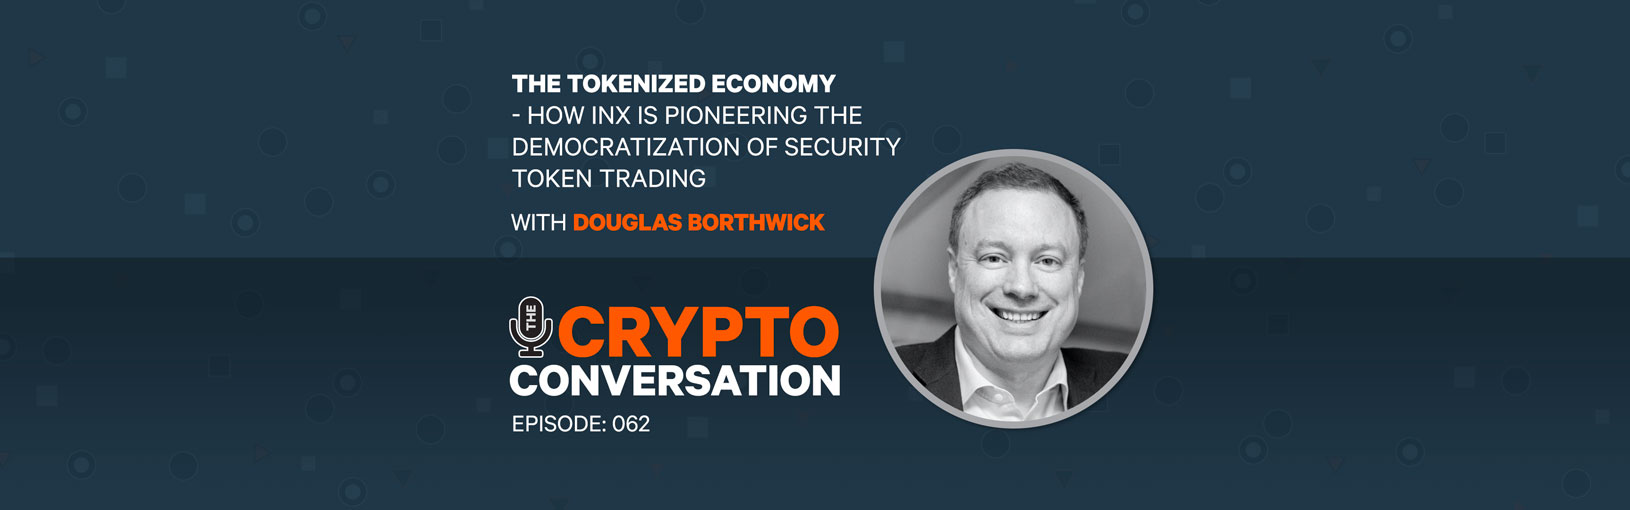 The Tokenized Economy – INX is pioneering the democratization of security token trading